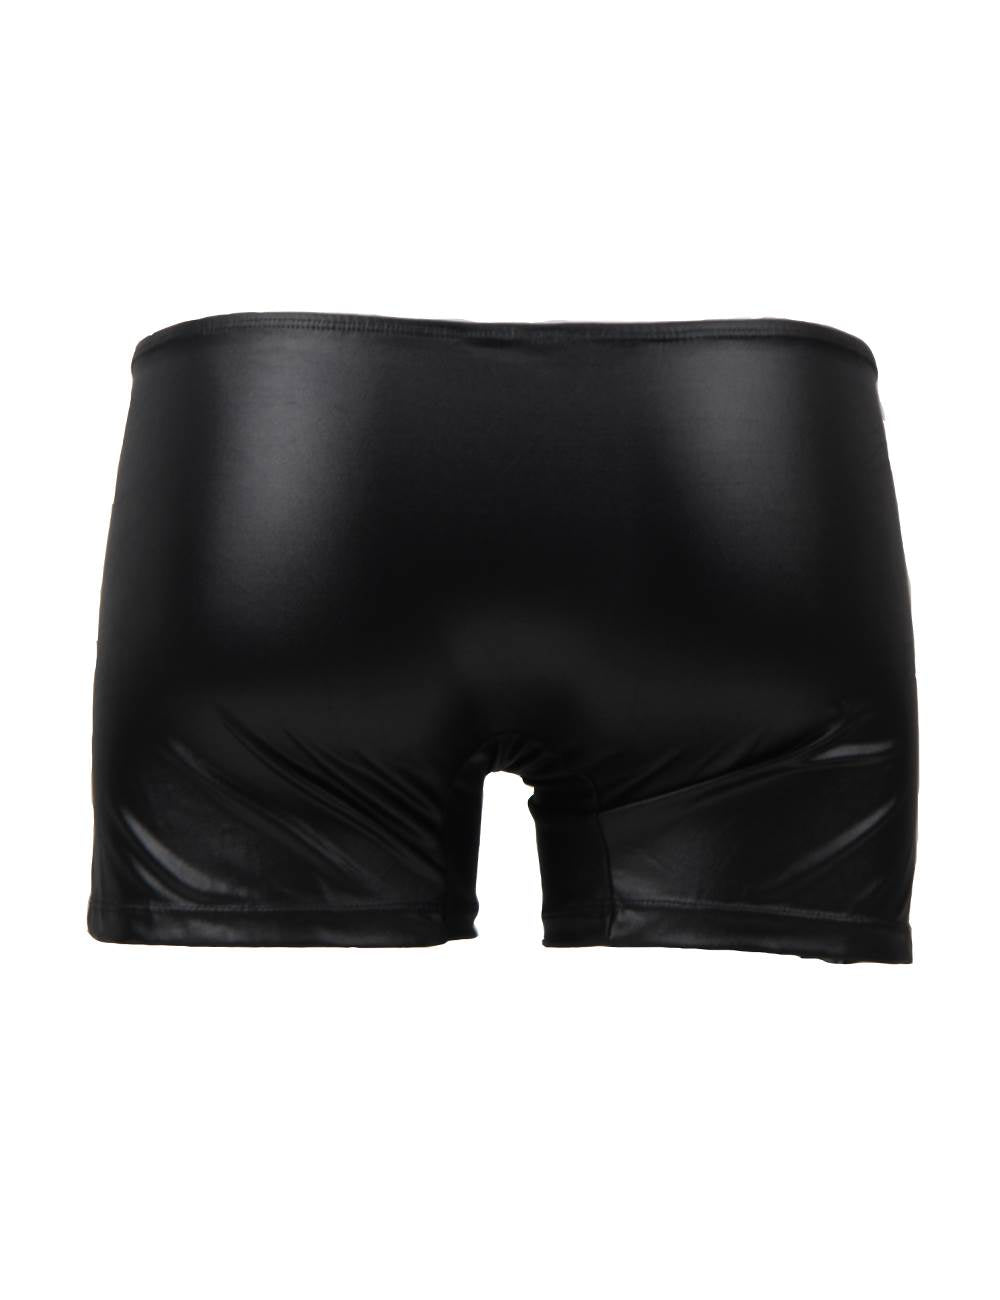 JCSTK -  Mens Wetlook Boxer Shorts with Zipper Pouch Front Black